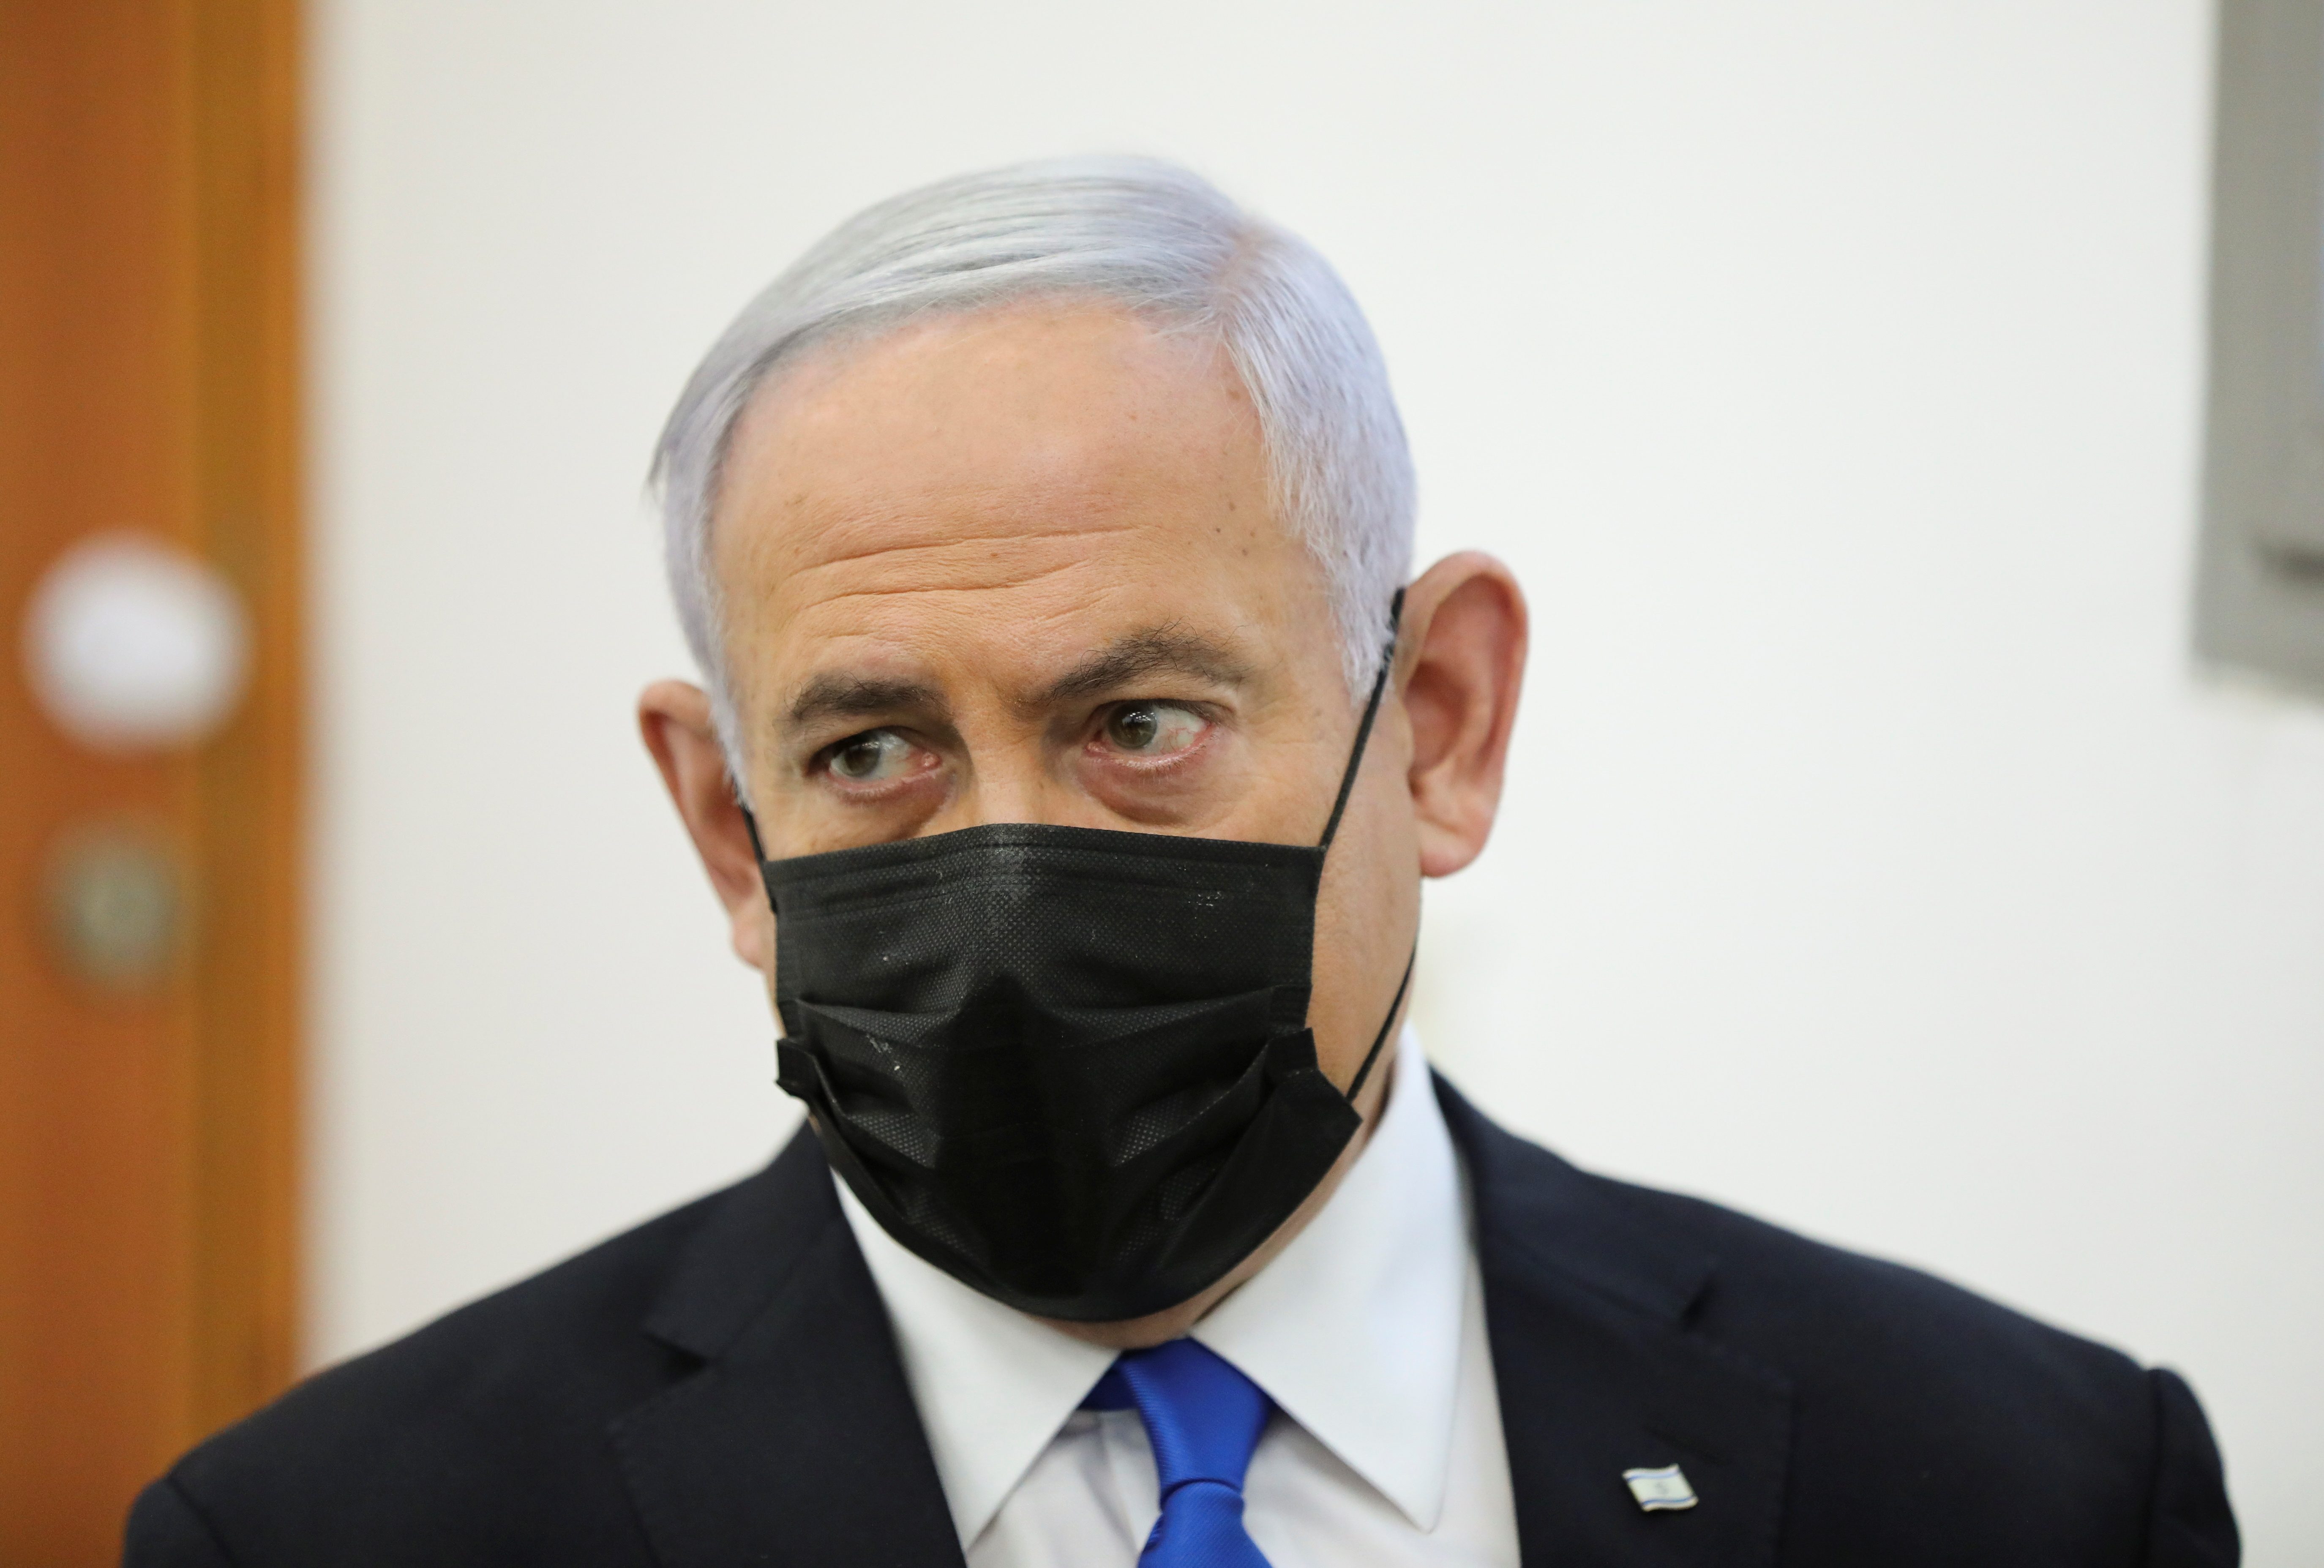 Skeptical president invites Netanyahu to form next Israeli government